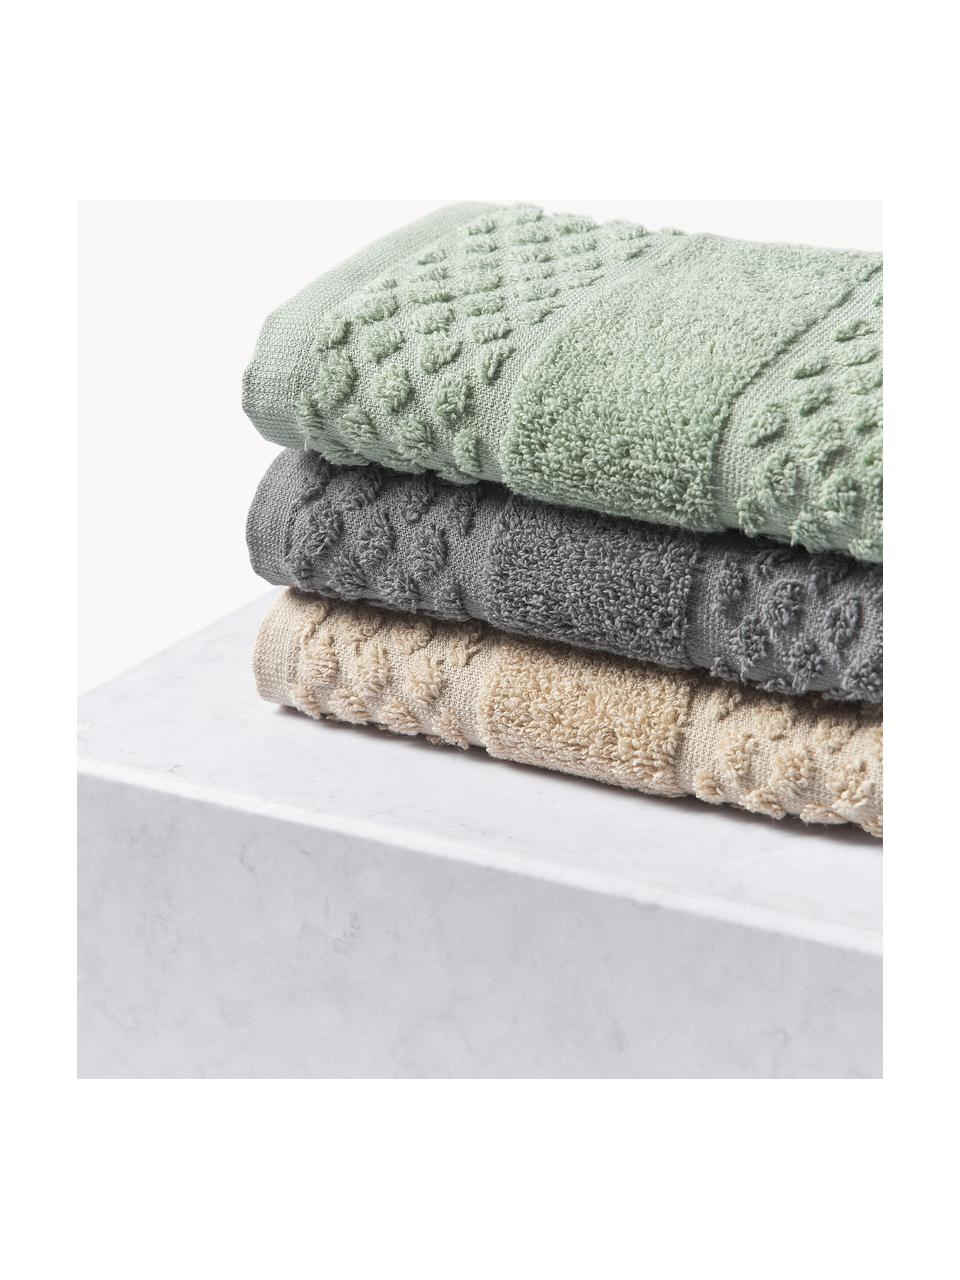 Set de toallas texturizada Katharina, tamaños diferentes, Beige, Set de 3 (toalla tocador, toalla lavabo y toalla ducha)